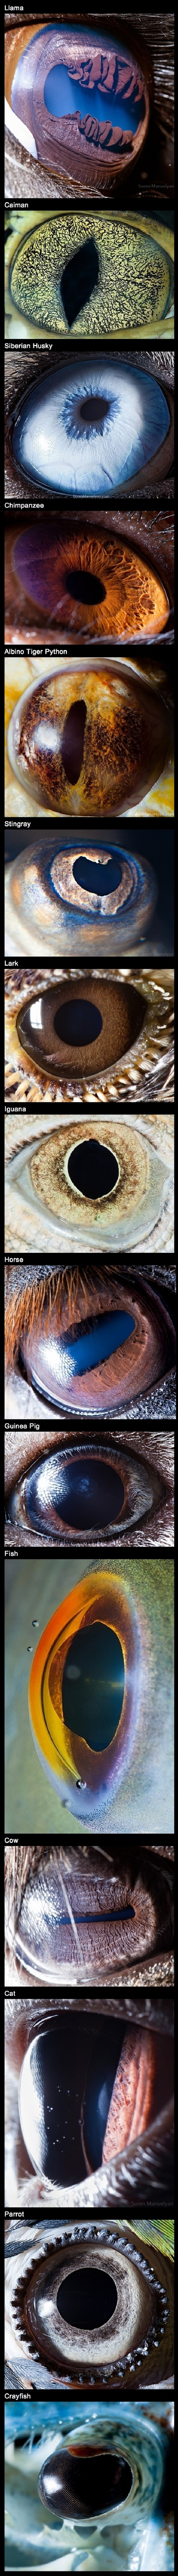 Eyes of animals